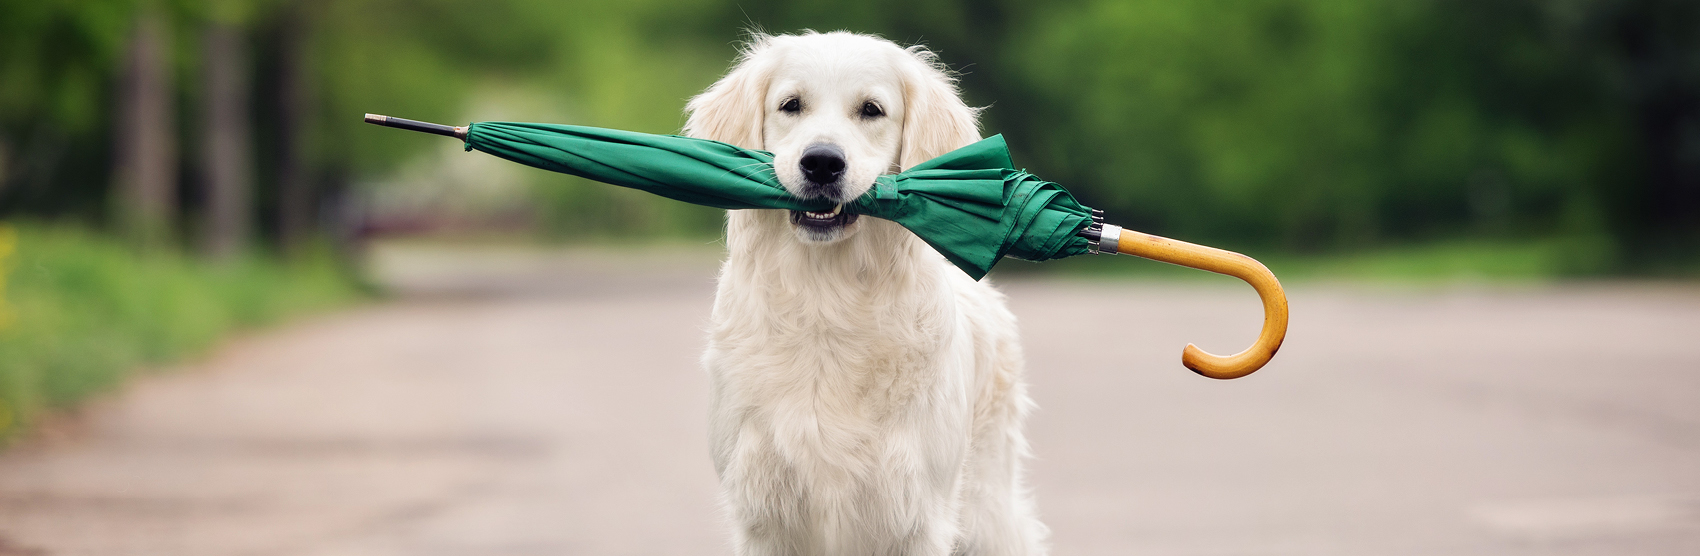 White dog holding a green umbrella